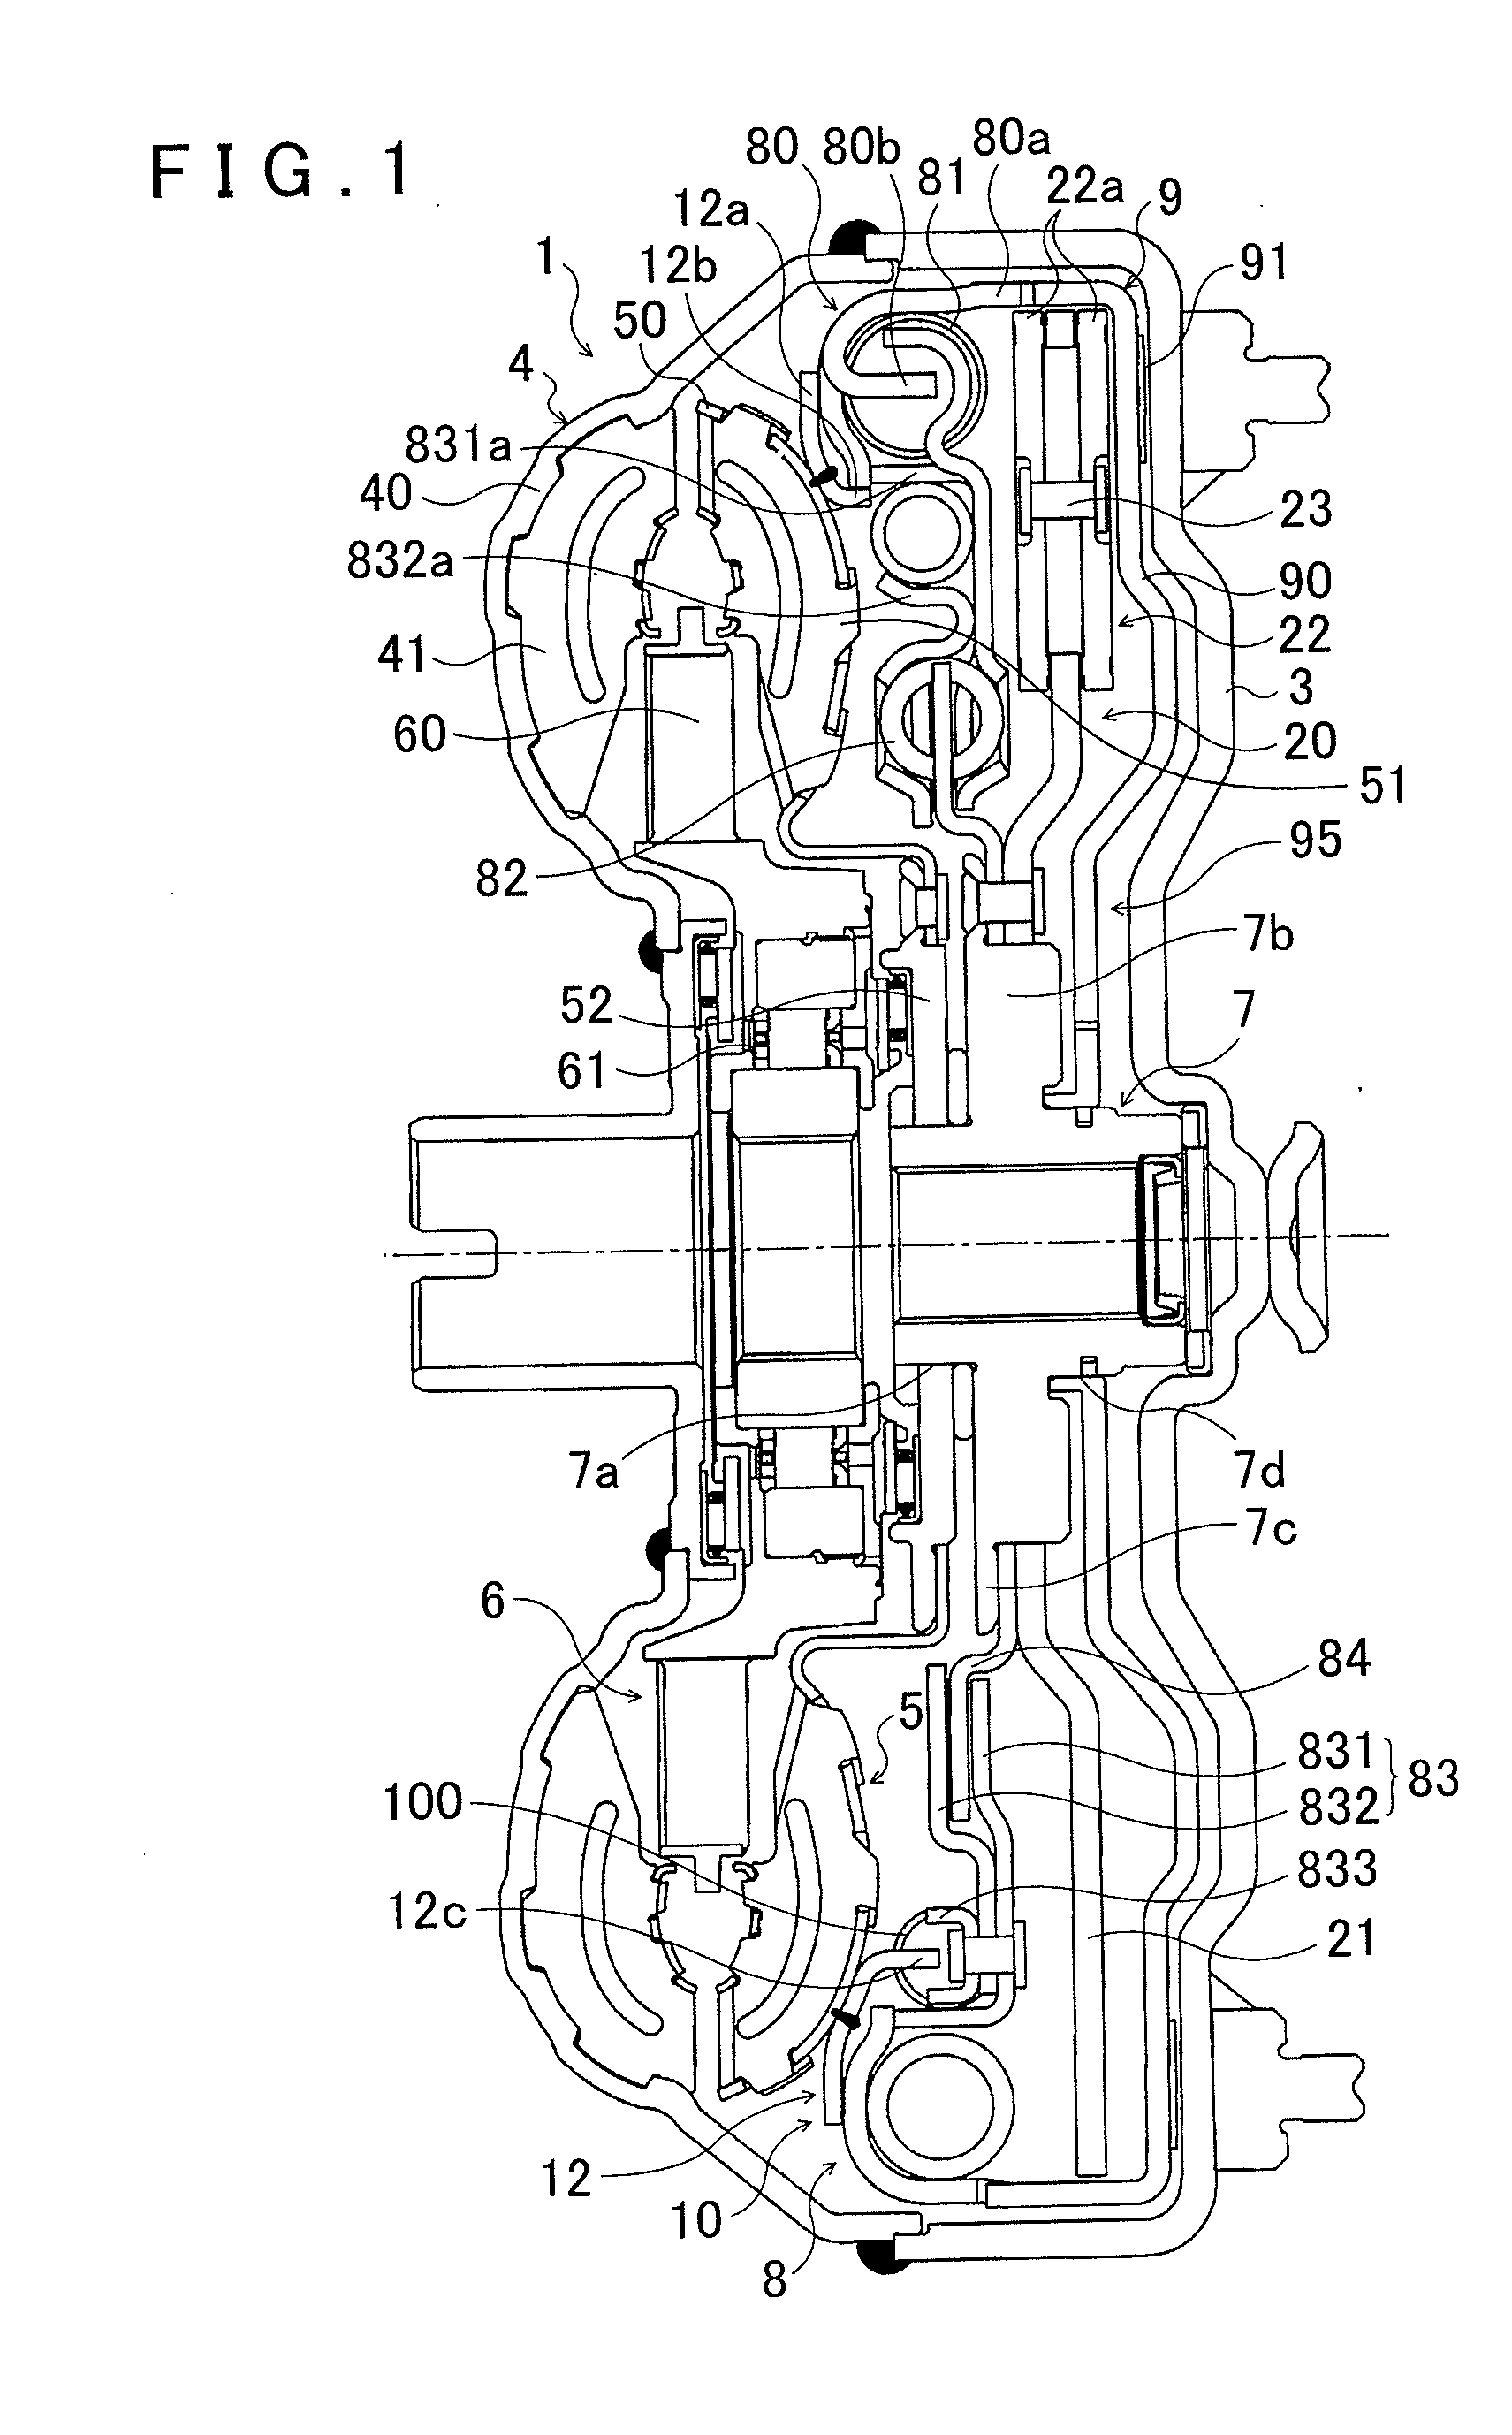 Fluid transmission apparatus